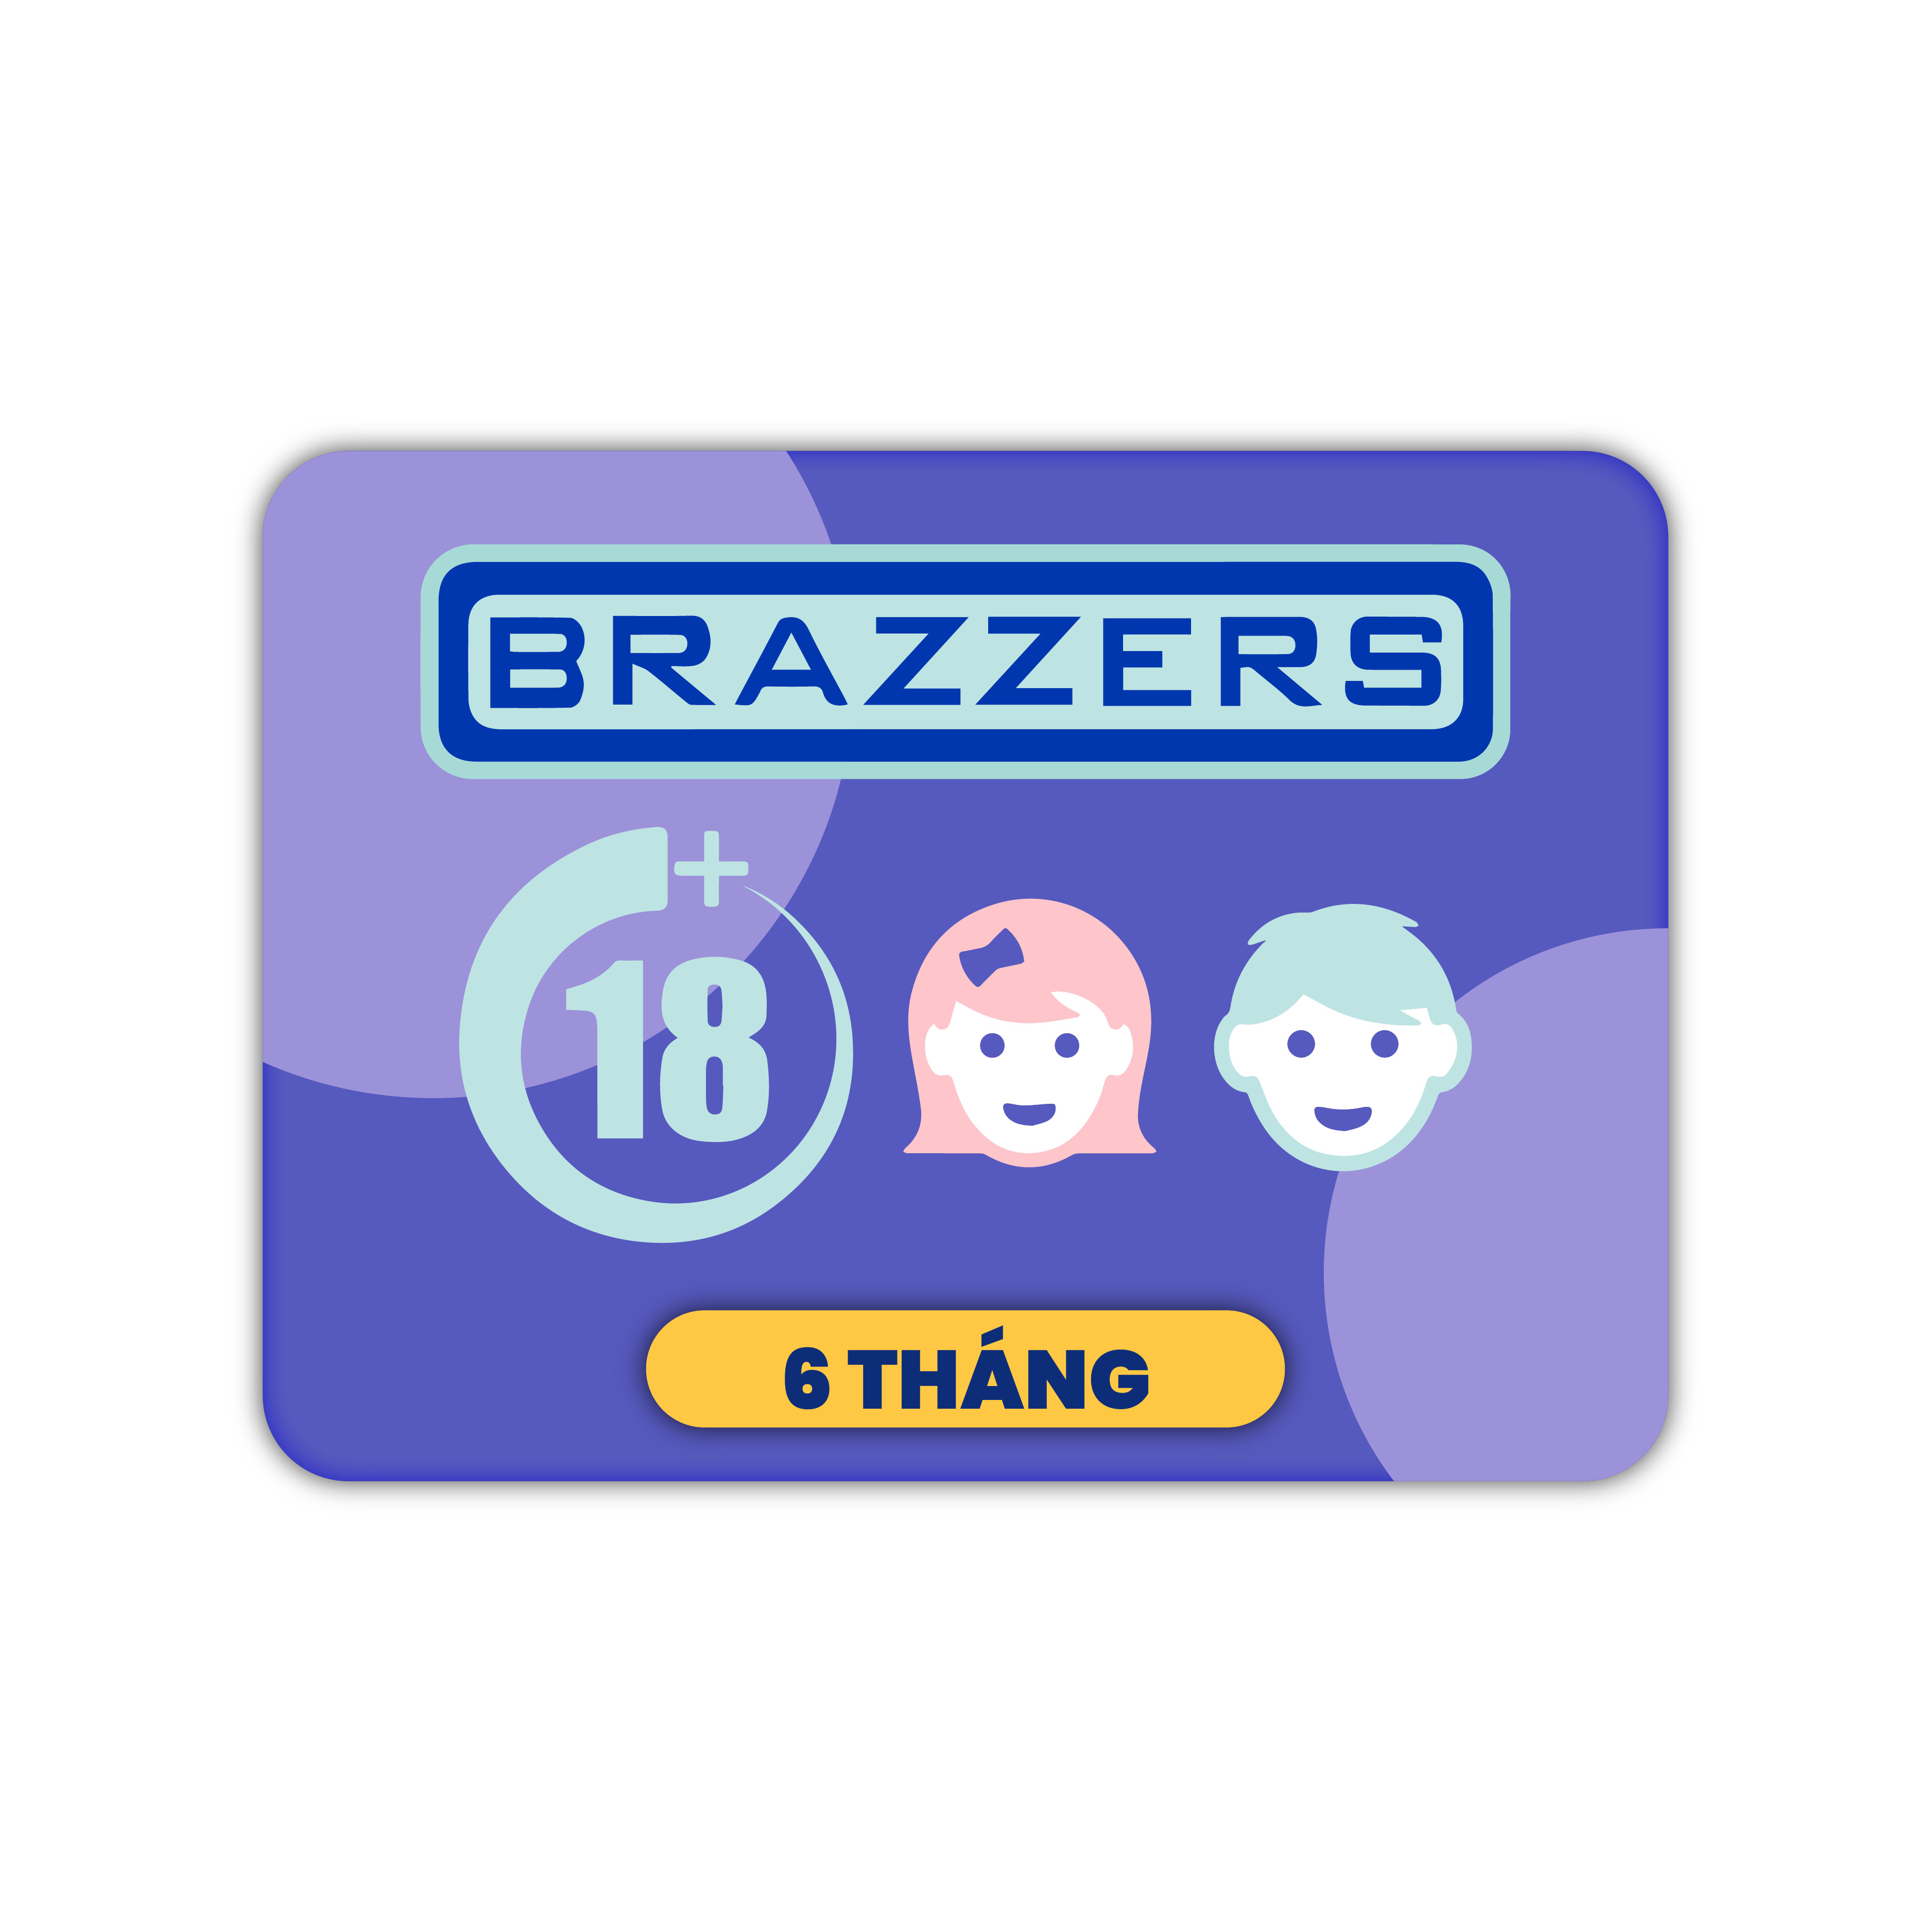 Mua Brazzer Premium 6 tháng